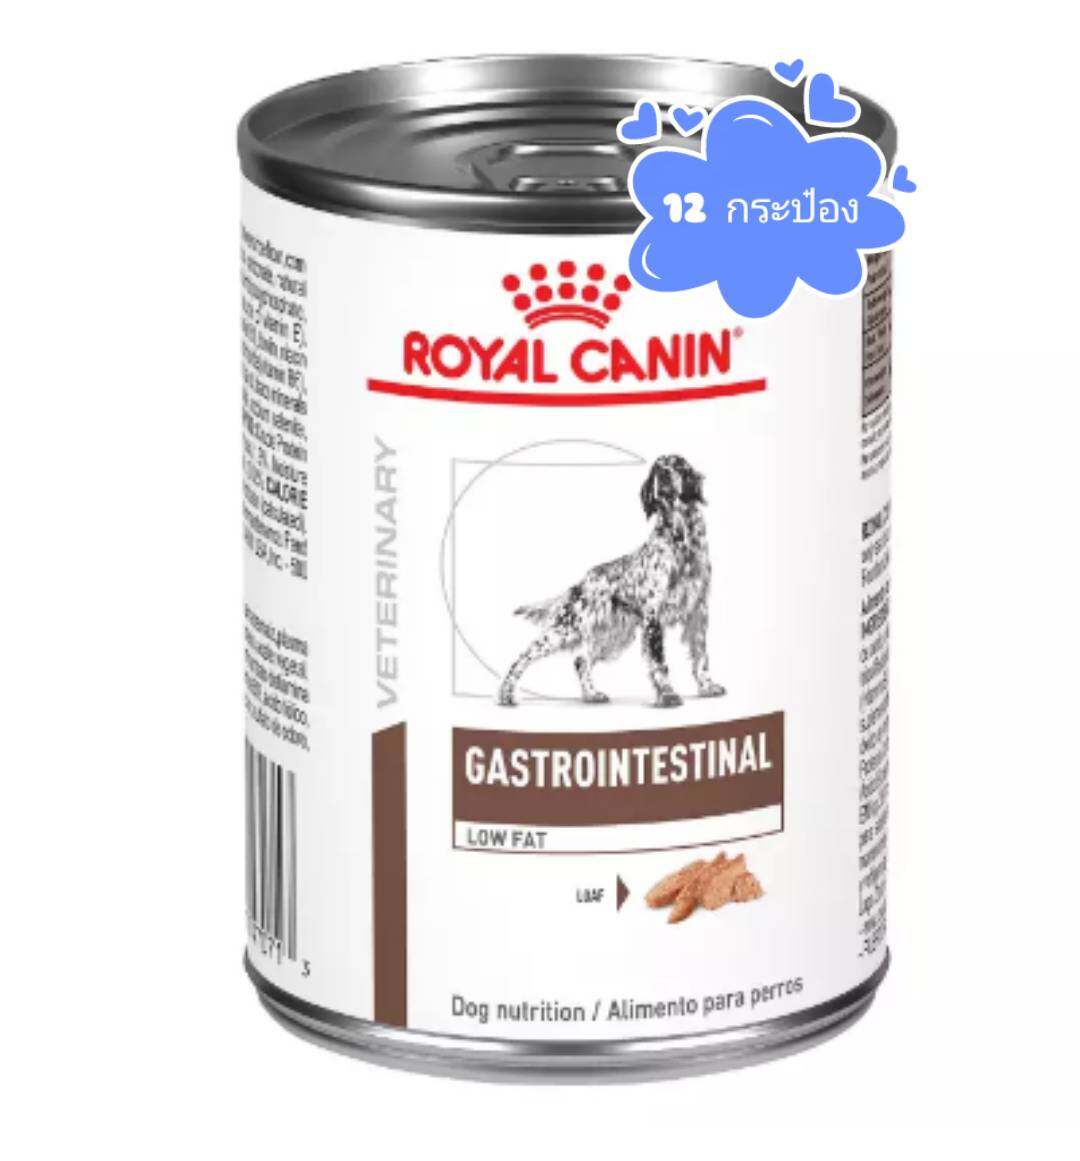 Royal Canin Gastro Intestinal low fat 410 g (12 กระป๋อง)สำหรับสุนัข ตับอ่อนอักเสบ ไขมันในเลือดสูง